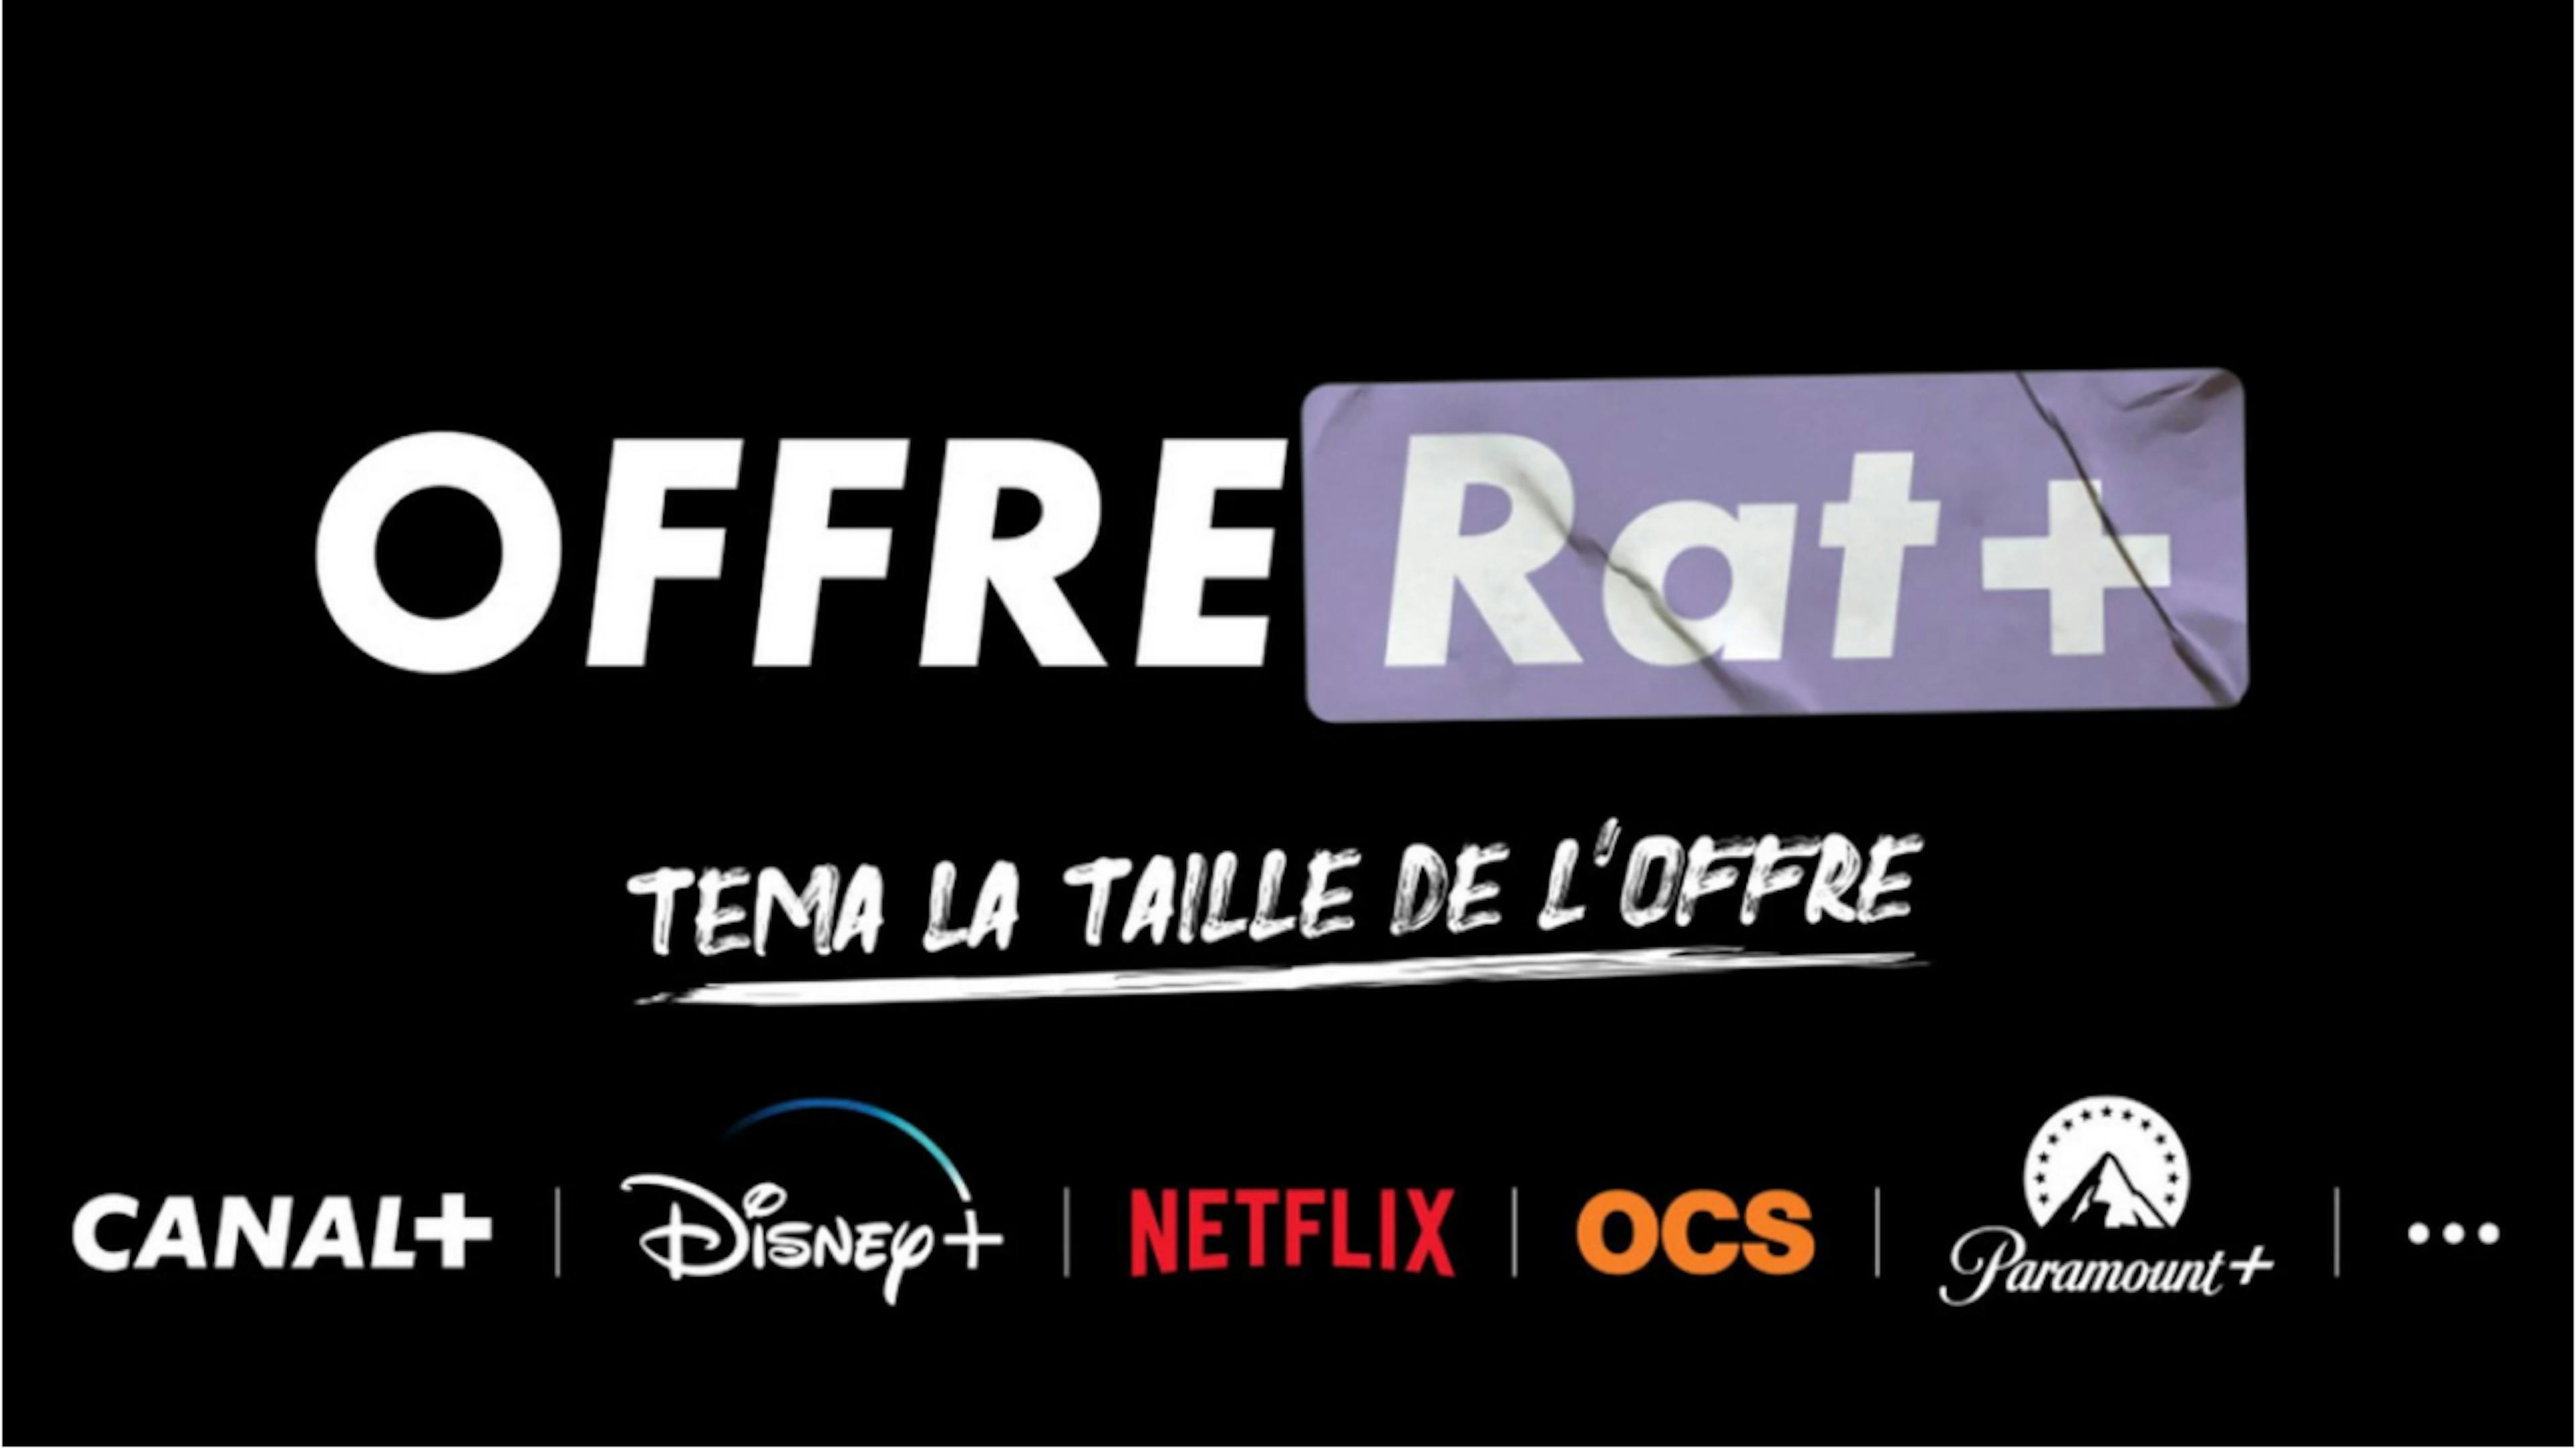 Offre Rat+ - Canal+